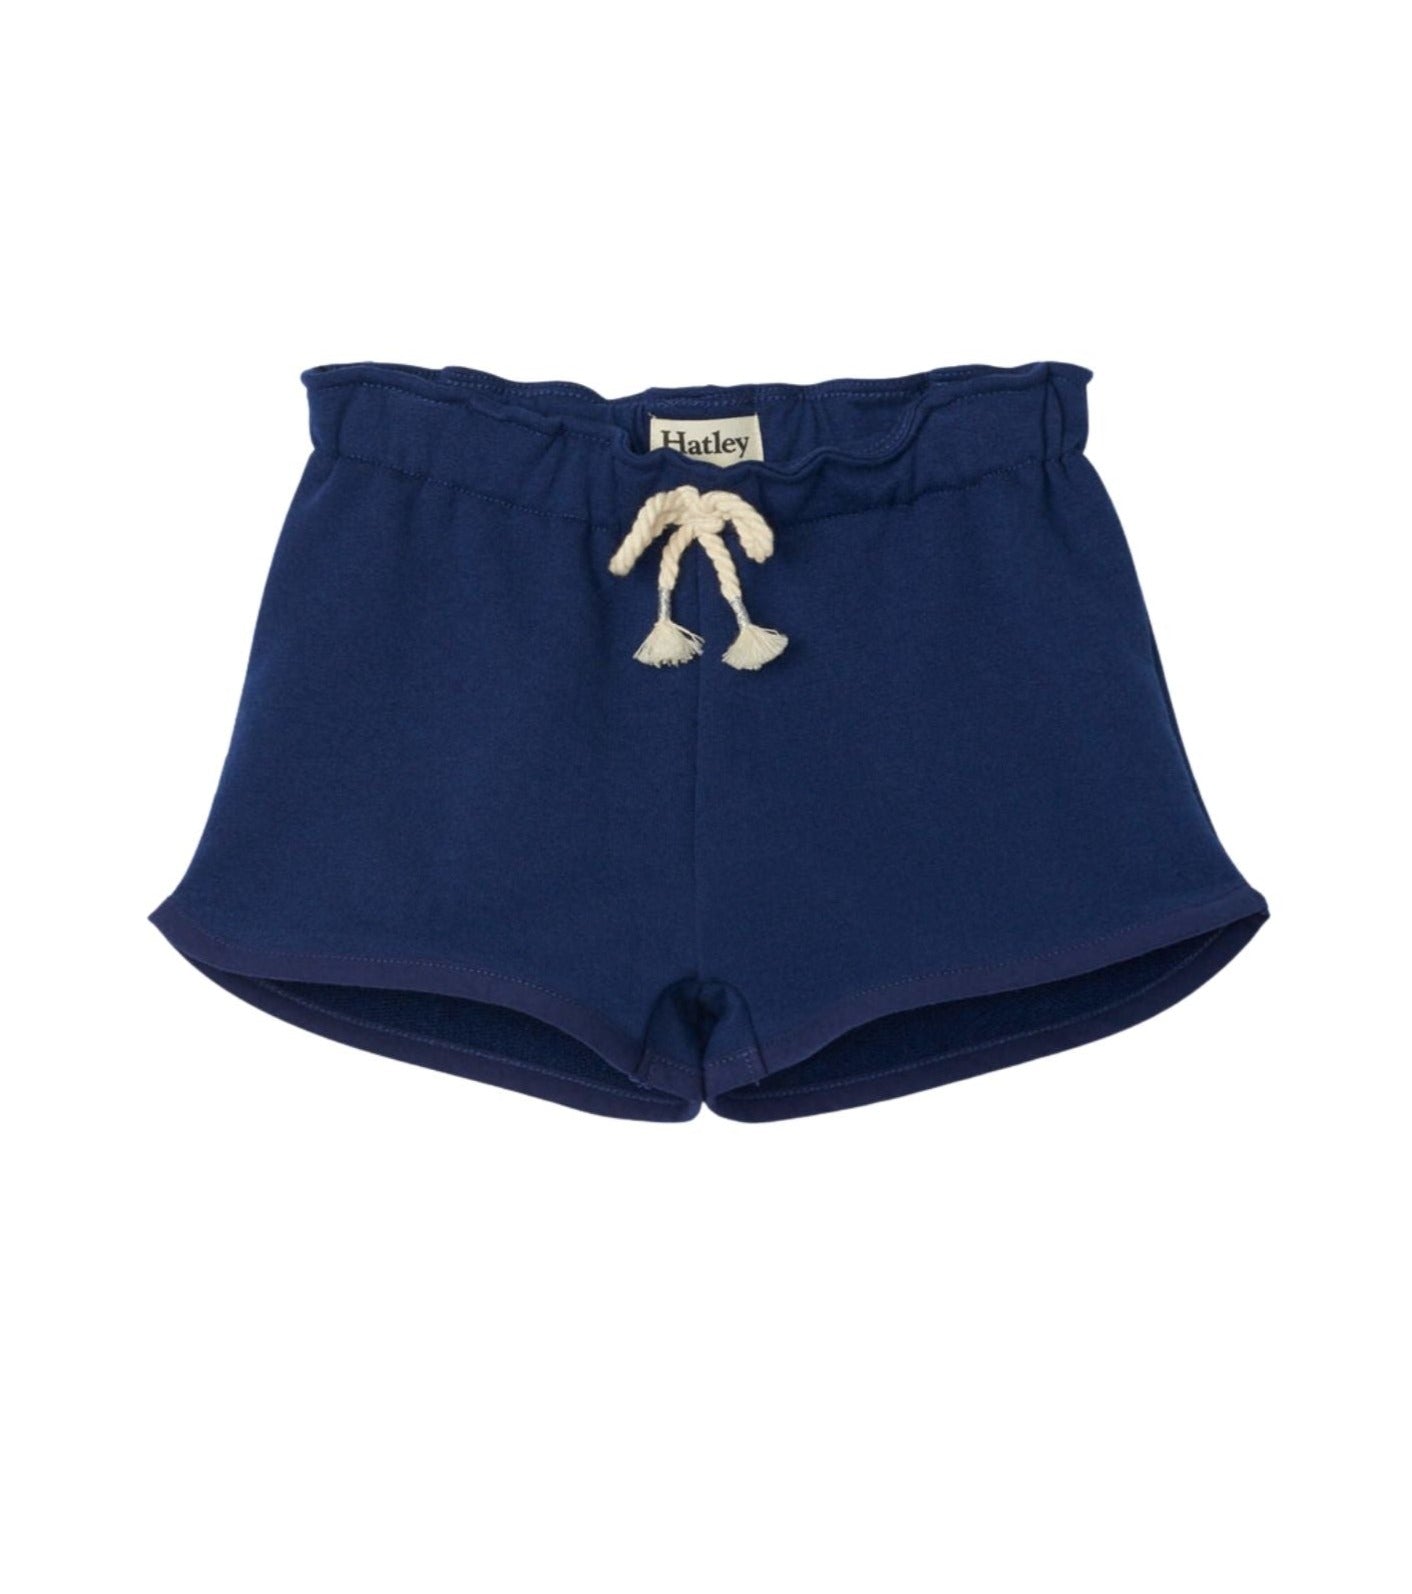 short navy sweat shorts - Hatley shorts